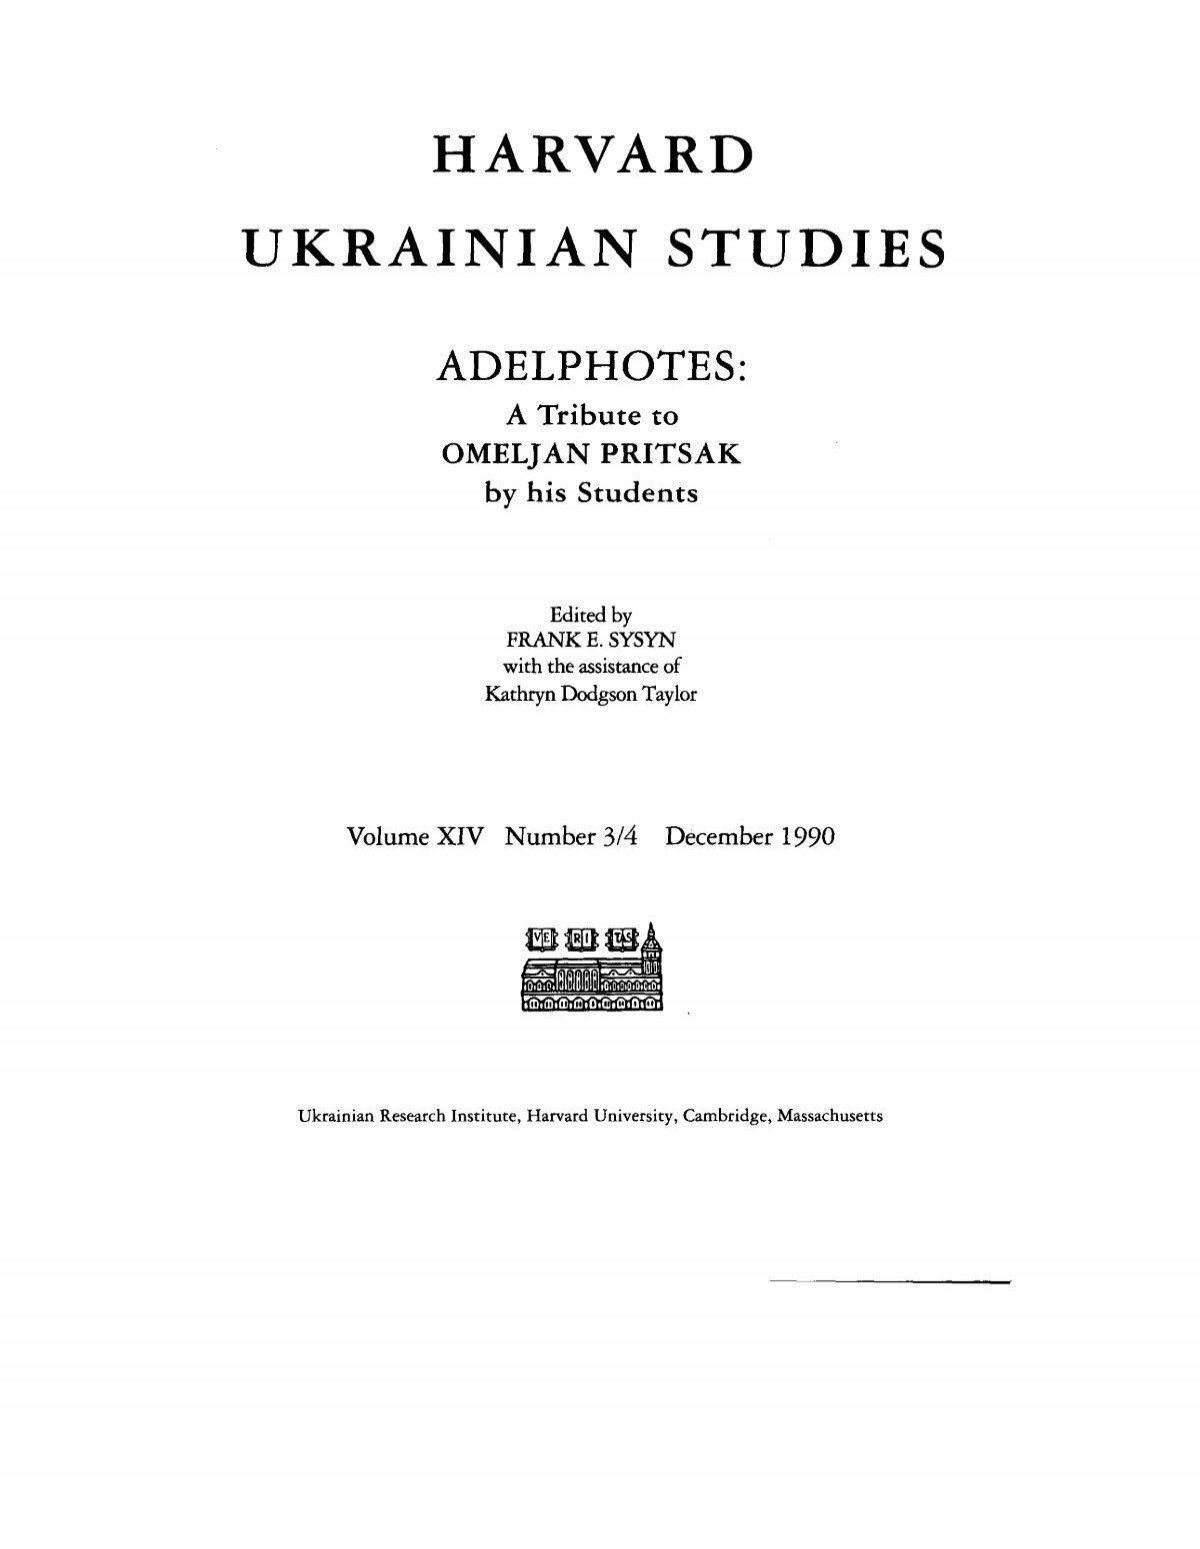 Harvard Ukrainian Studies Projects At Harvard